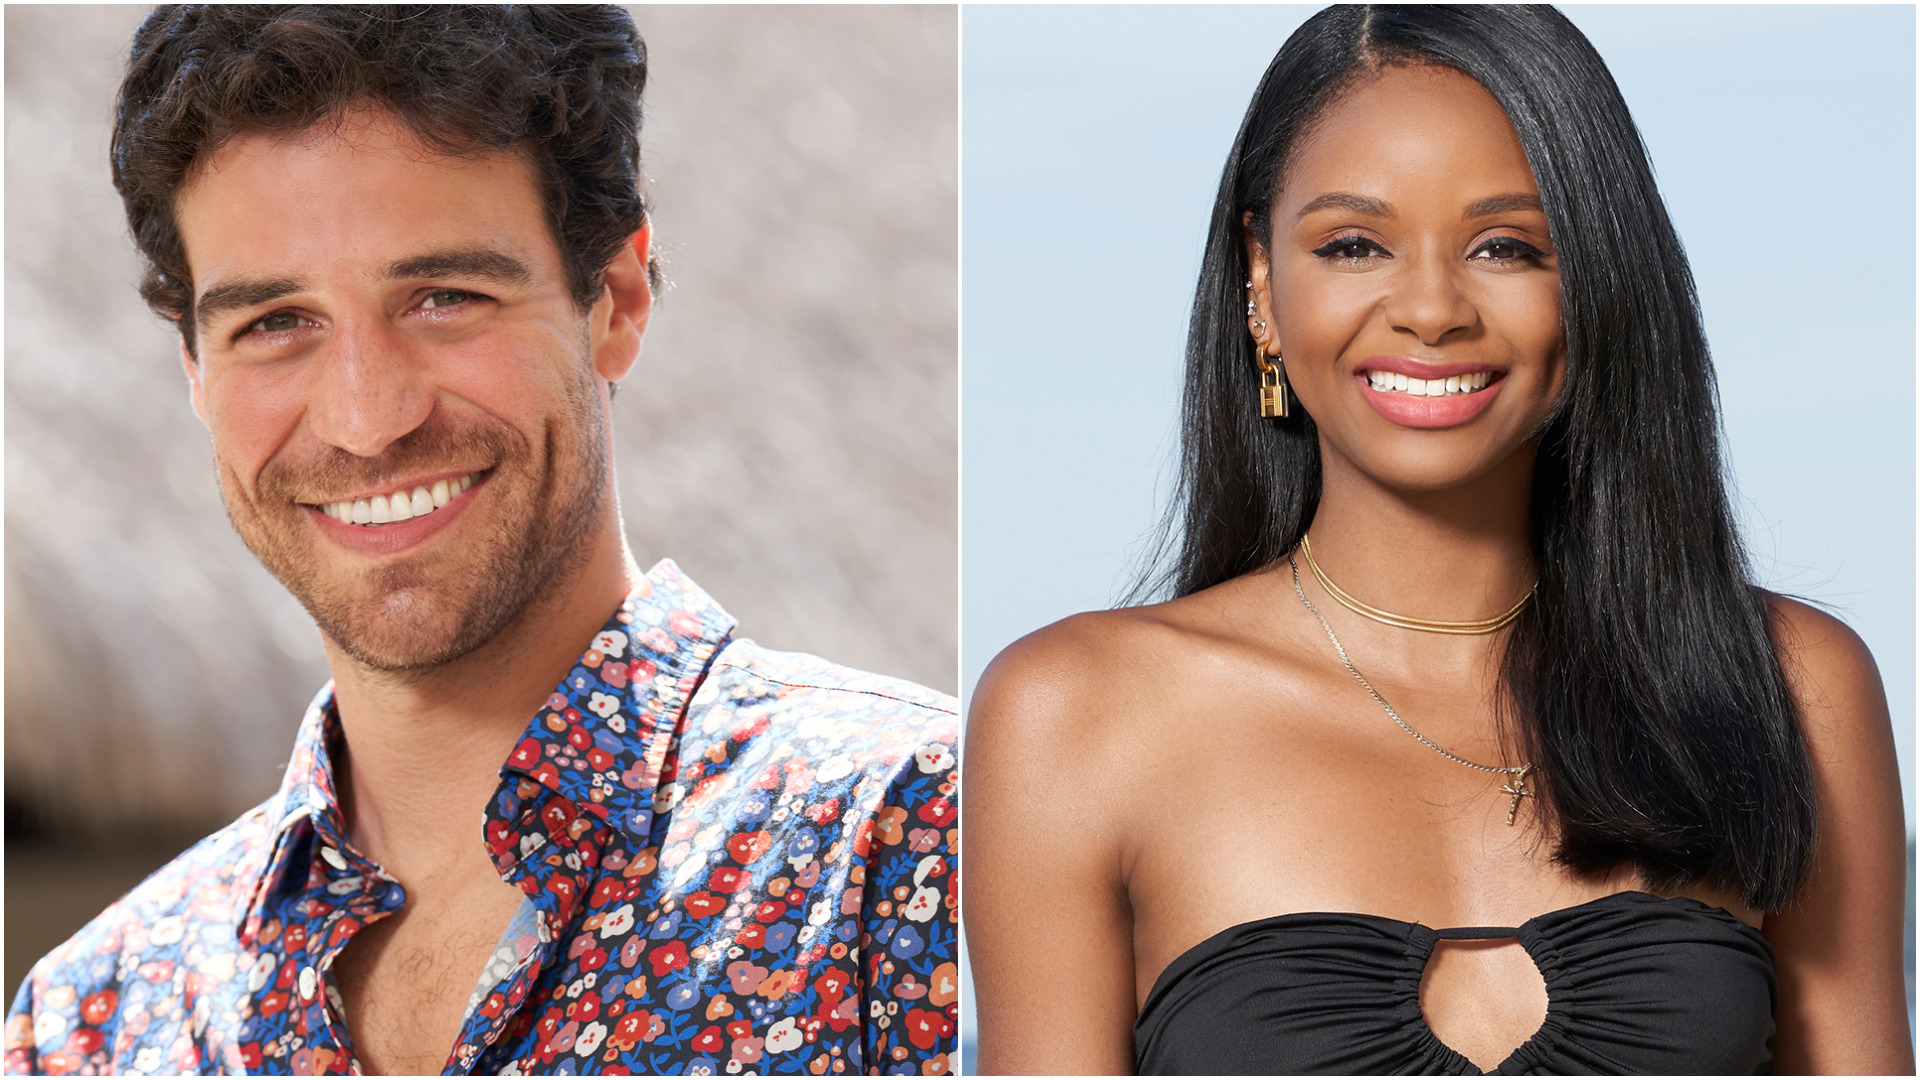 Headshots of Joe Amabile and Natasha Parker from ‘Bachelor in Paradise’ Season 7